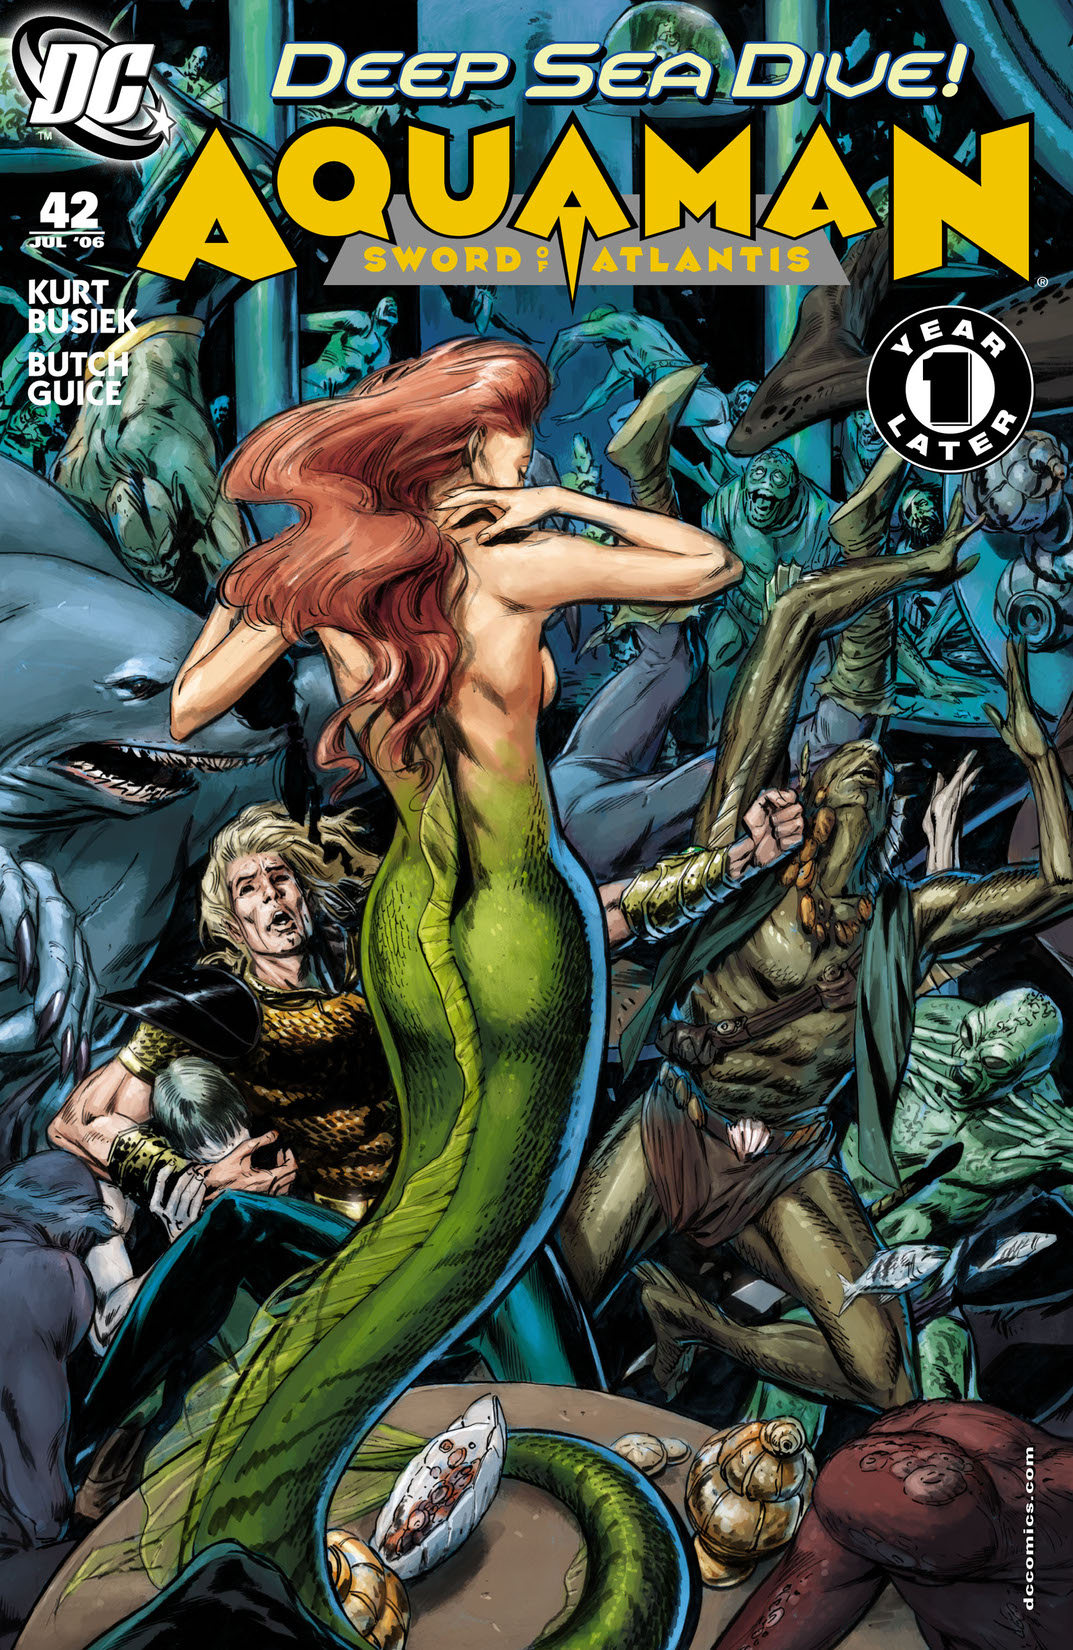 Aquaman (2002-2006) #42 preview images